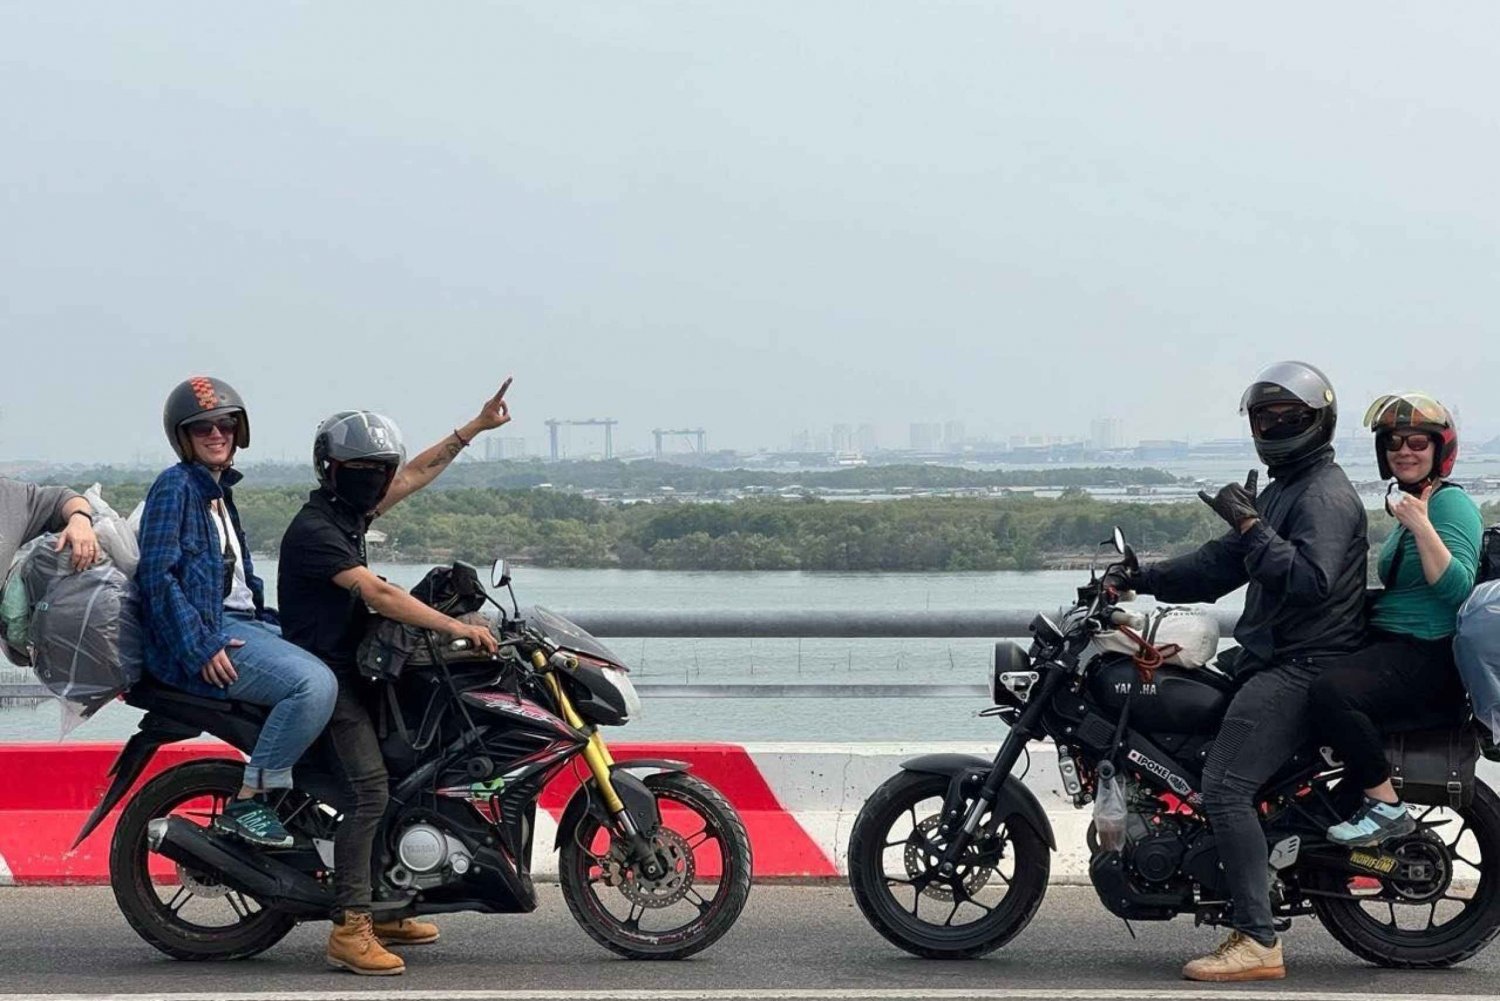 DAY TRIP MOTORCYCLE IN HAI VAN PASS